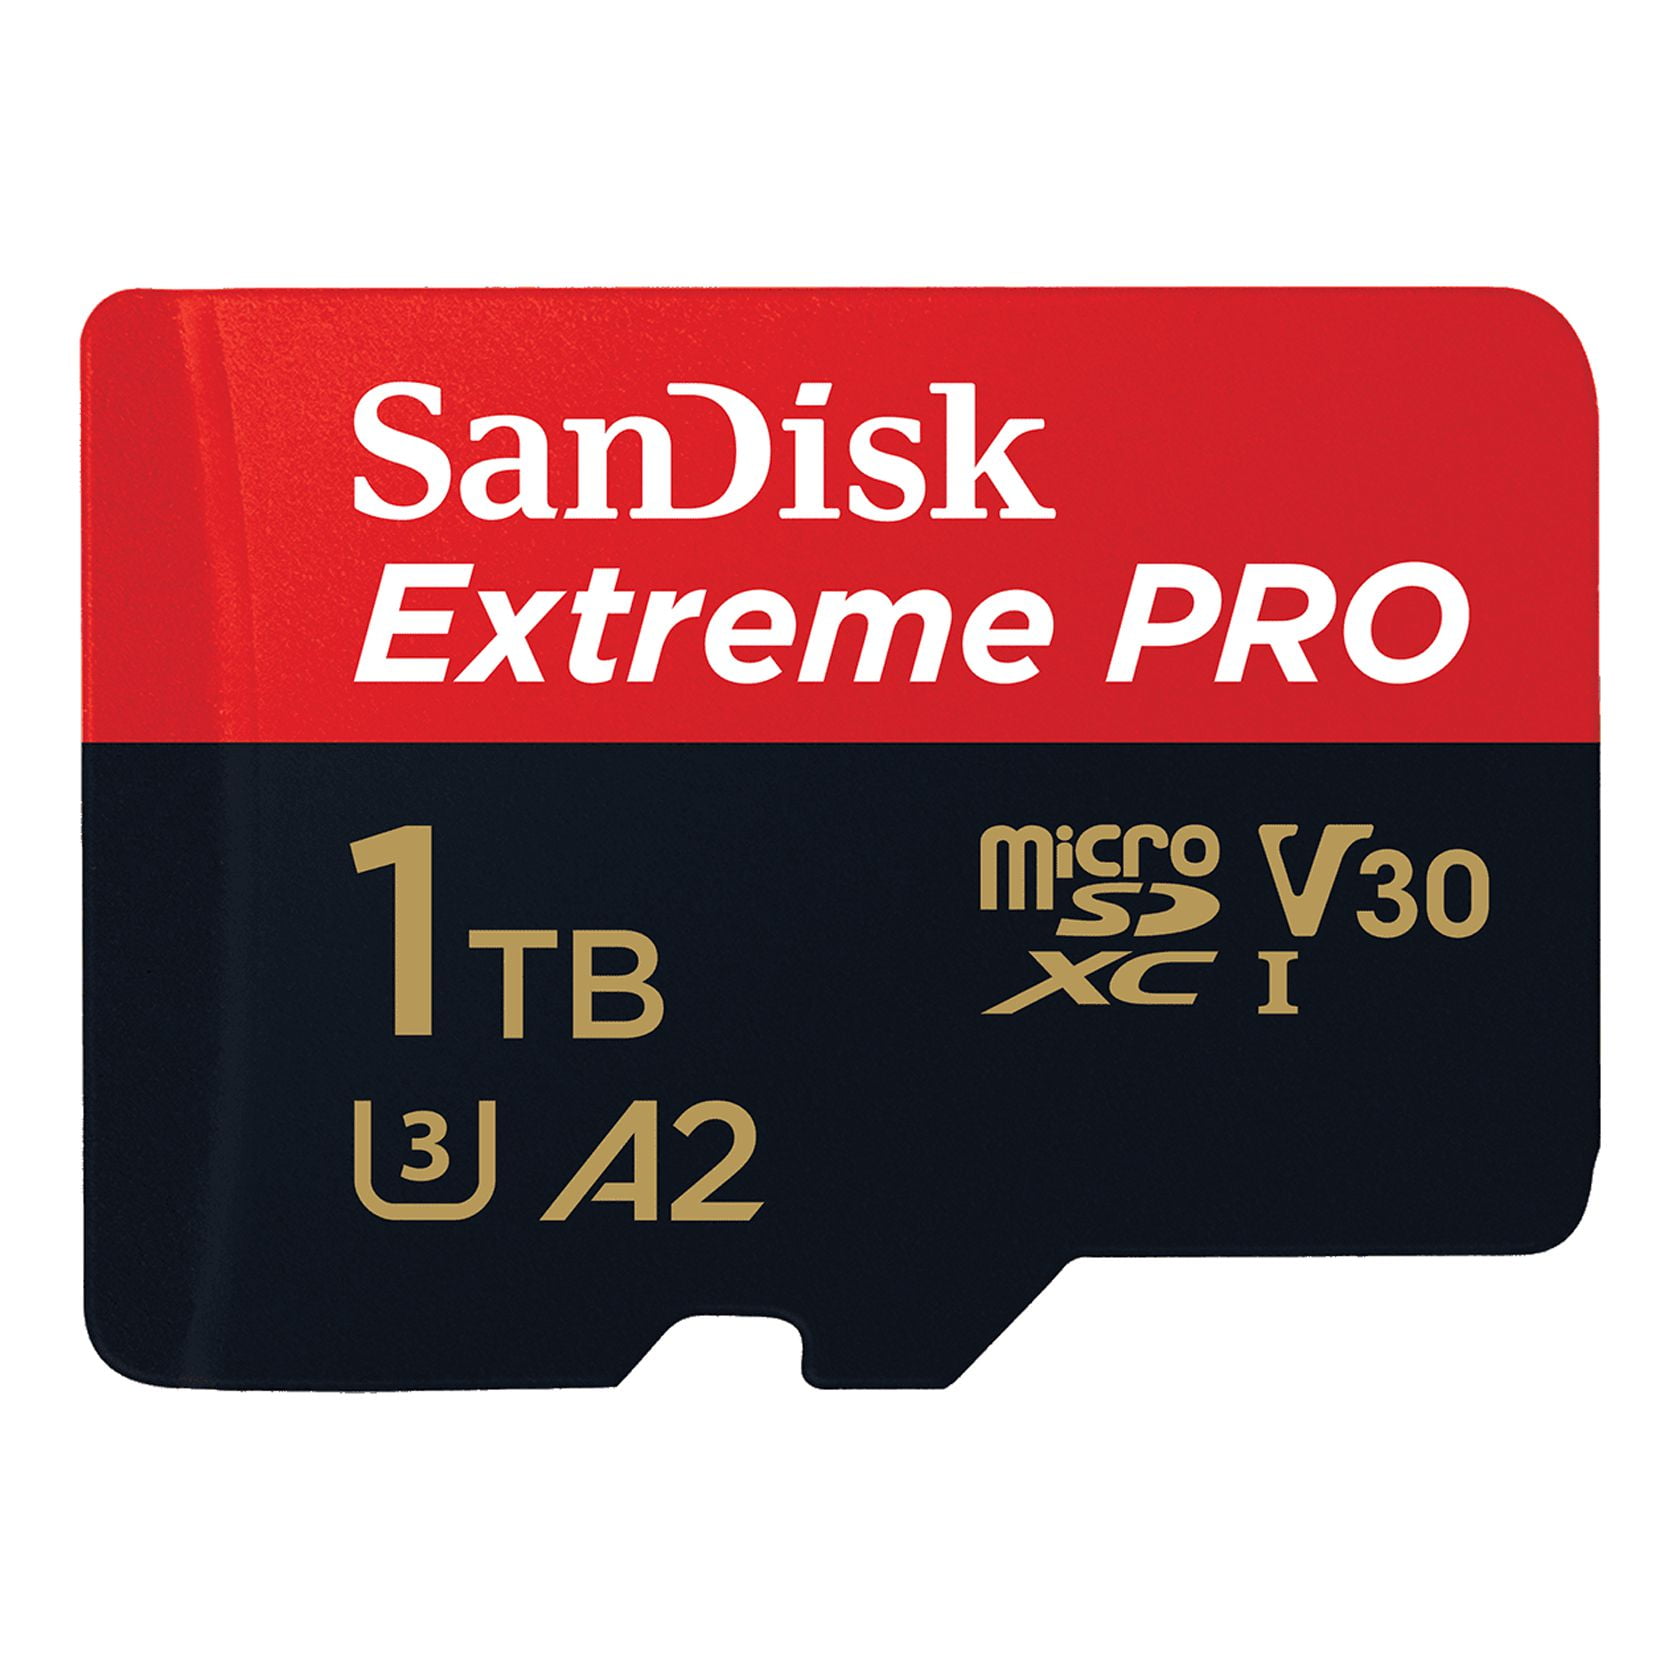 SanDisk 512GB Extreme Pro microSDXC UHS-I Memory Card - SDSQXCD 